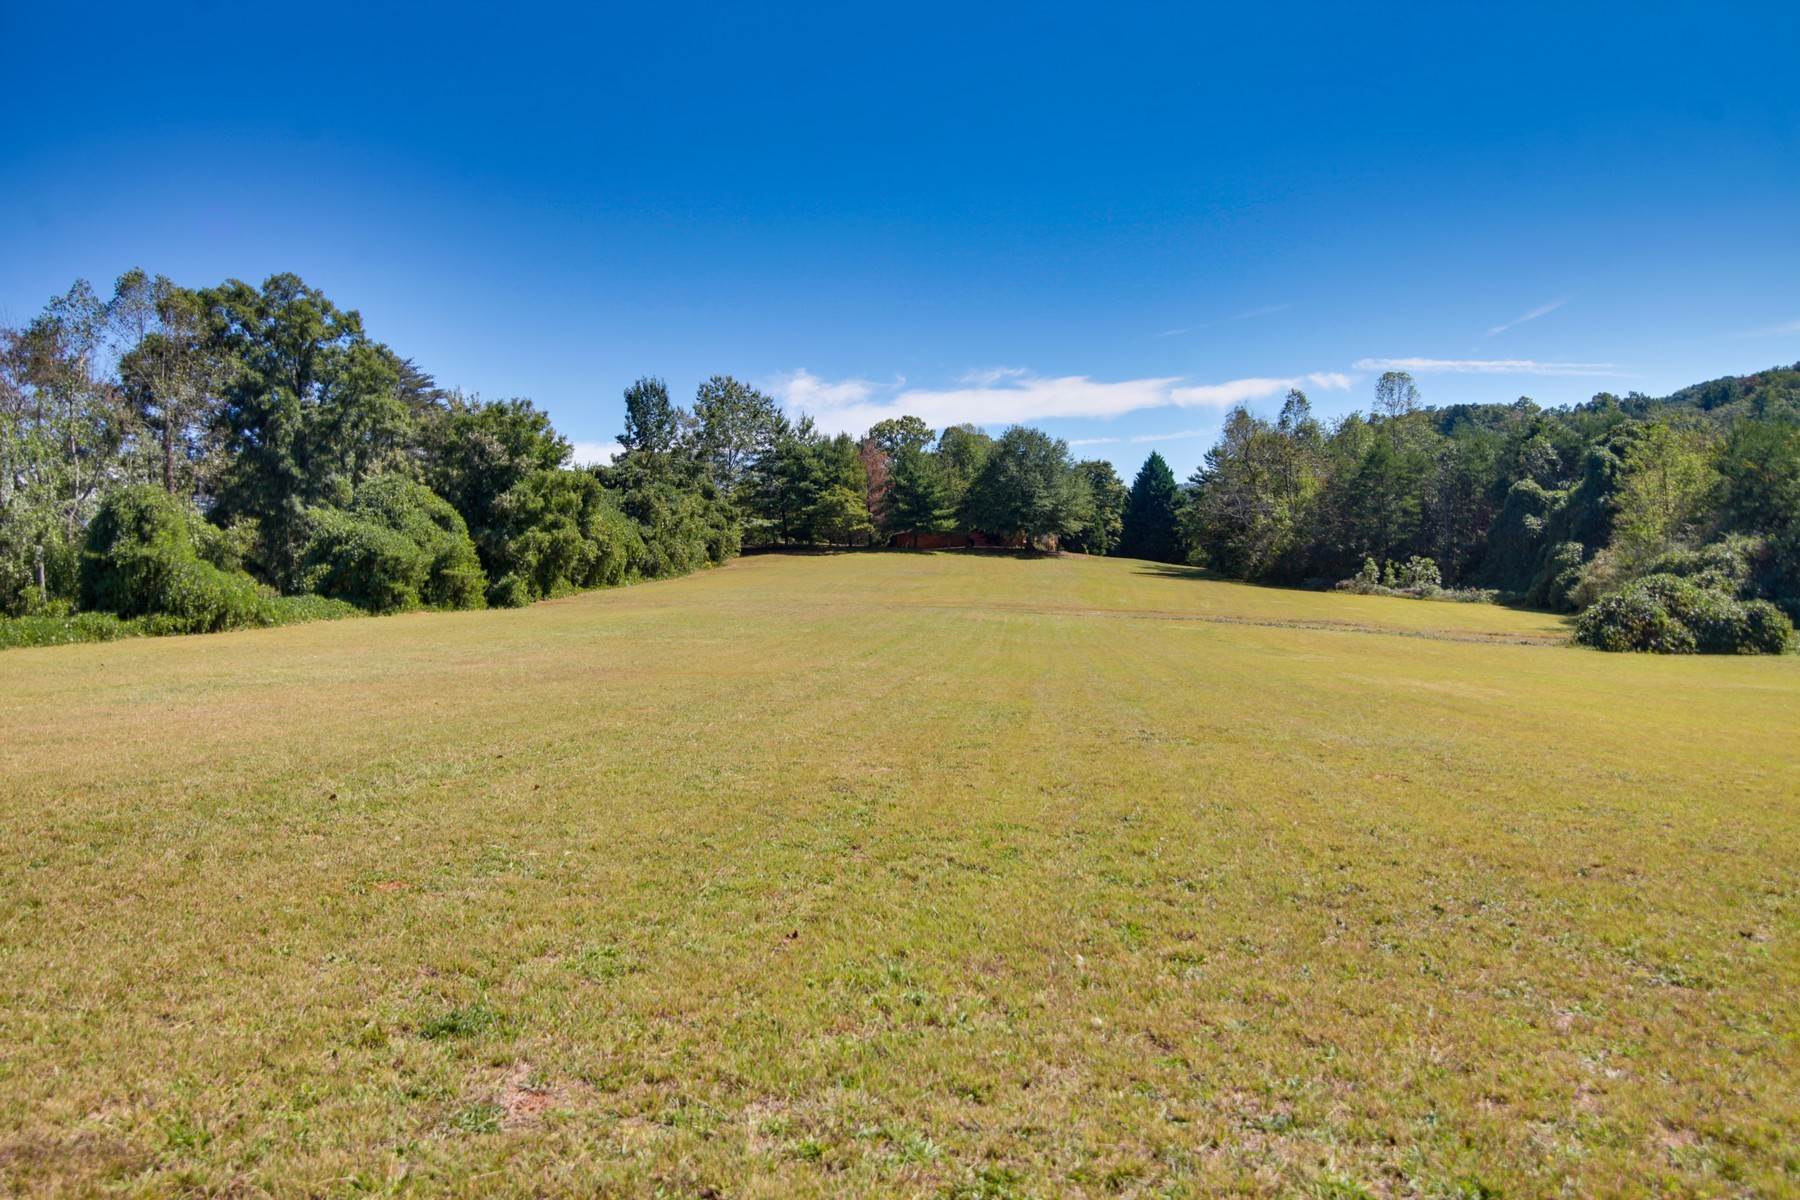 21. Land for Sale at Buffalo Creek Road - 4.52 acres non-zoned 0 Buffalo Creek Road Lake Lure, North Carolina 28746 United States